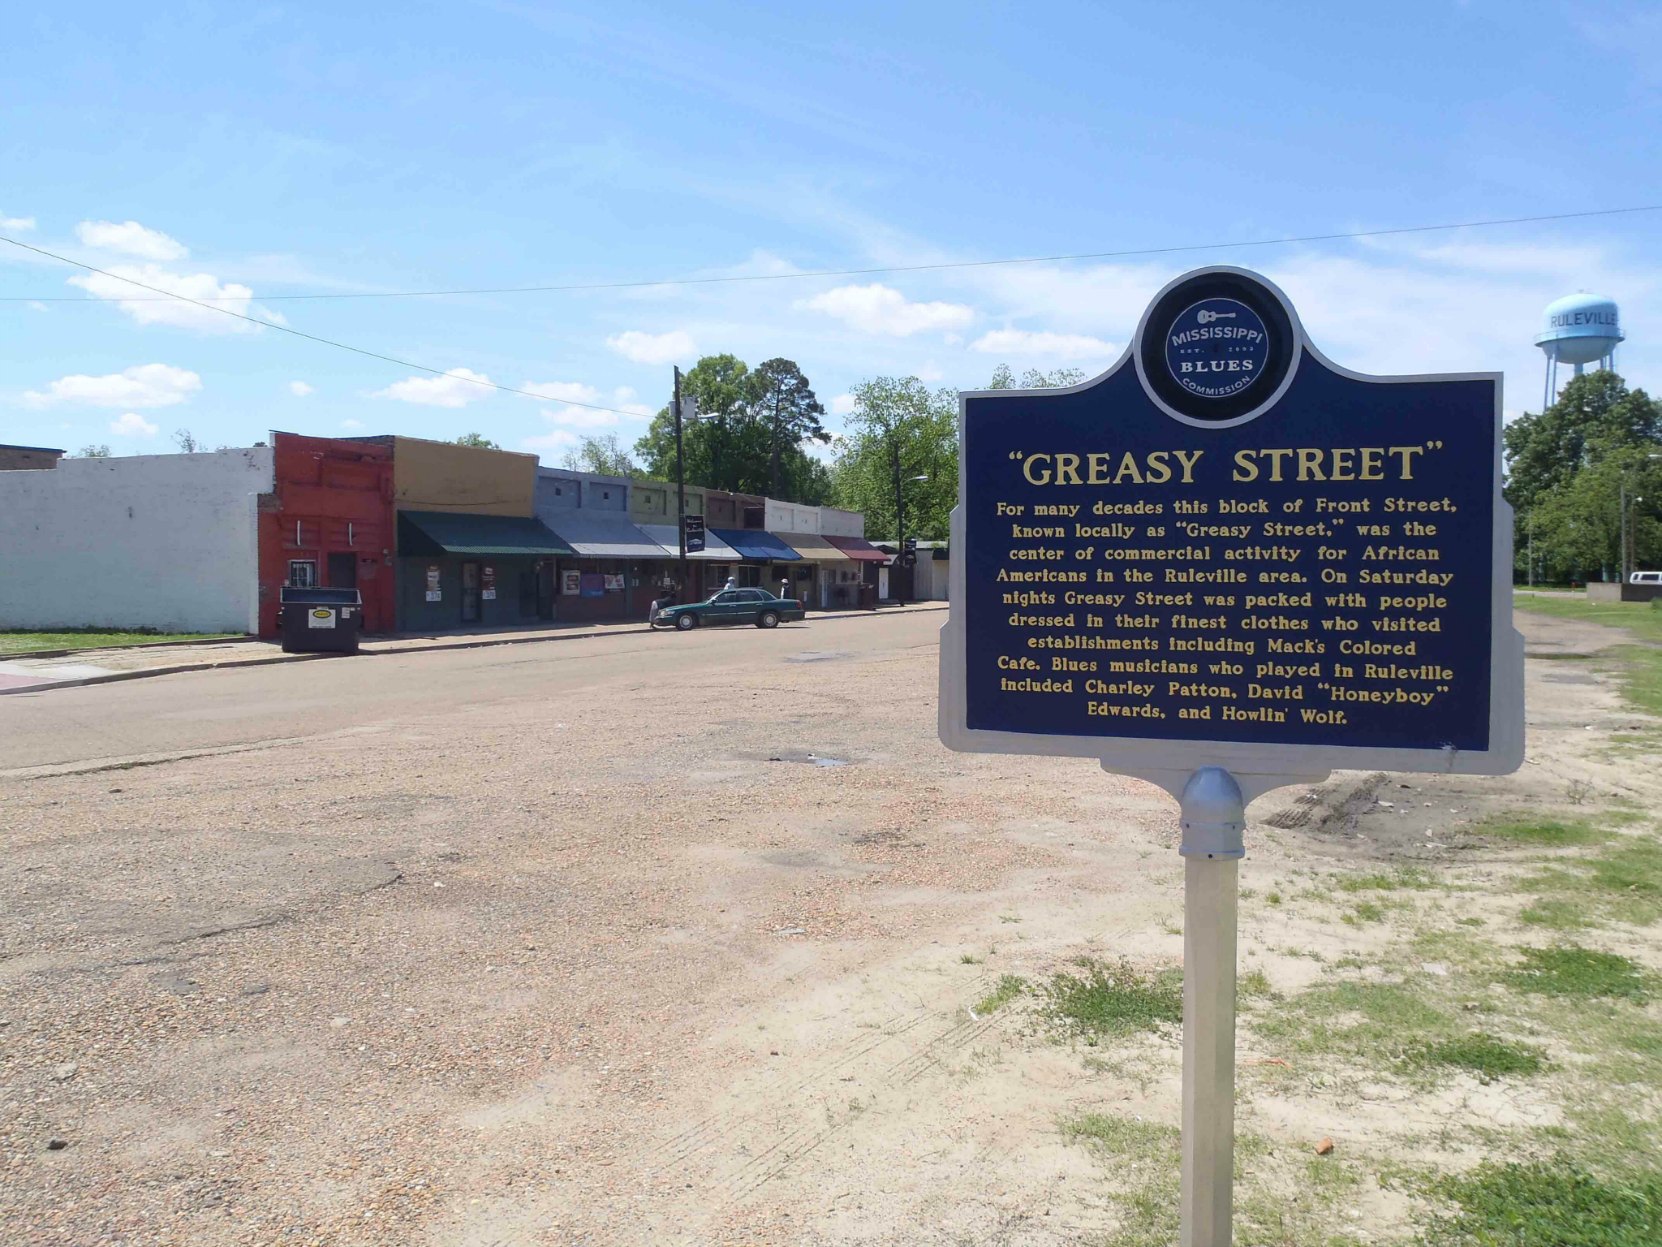 Mississippi Blues Trail marker commemorating Greasy Street, Ruleville, Mississippi